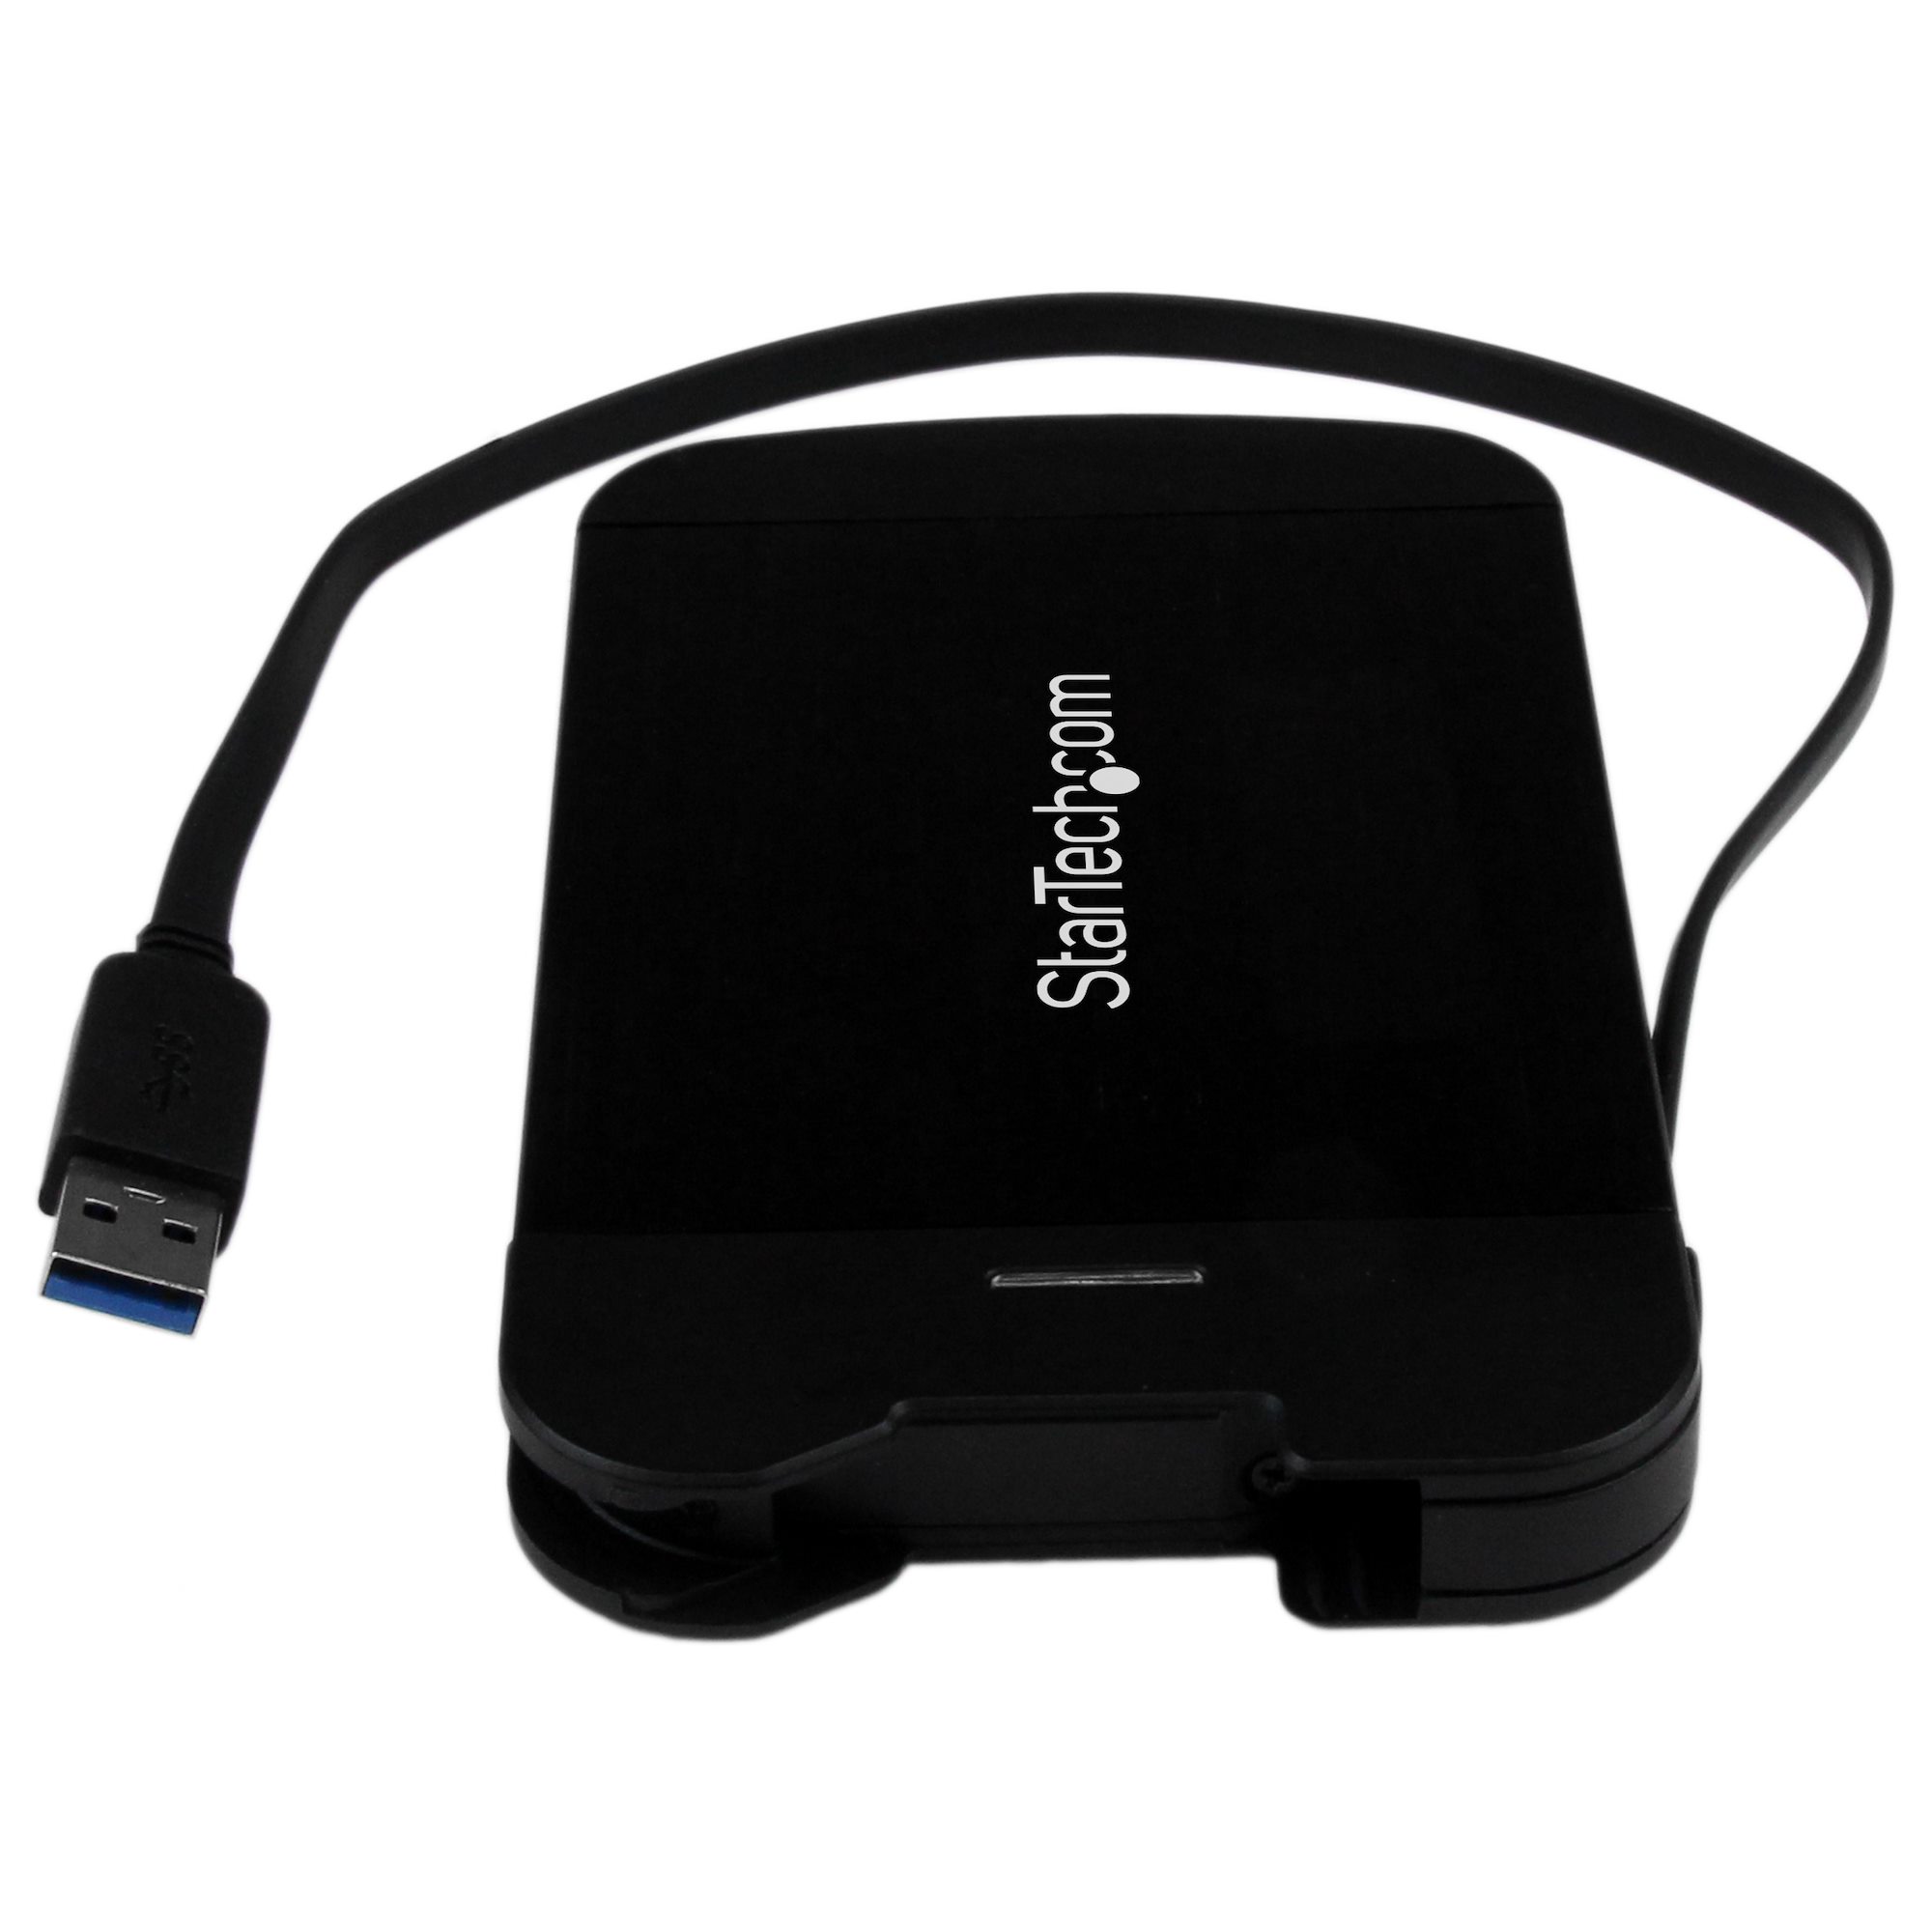 StarTech.com USB 3.0 to 2.5 SATA III Hard Drive Adapter Cable w/ UASP